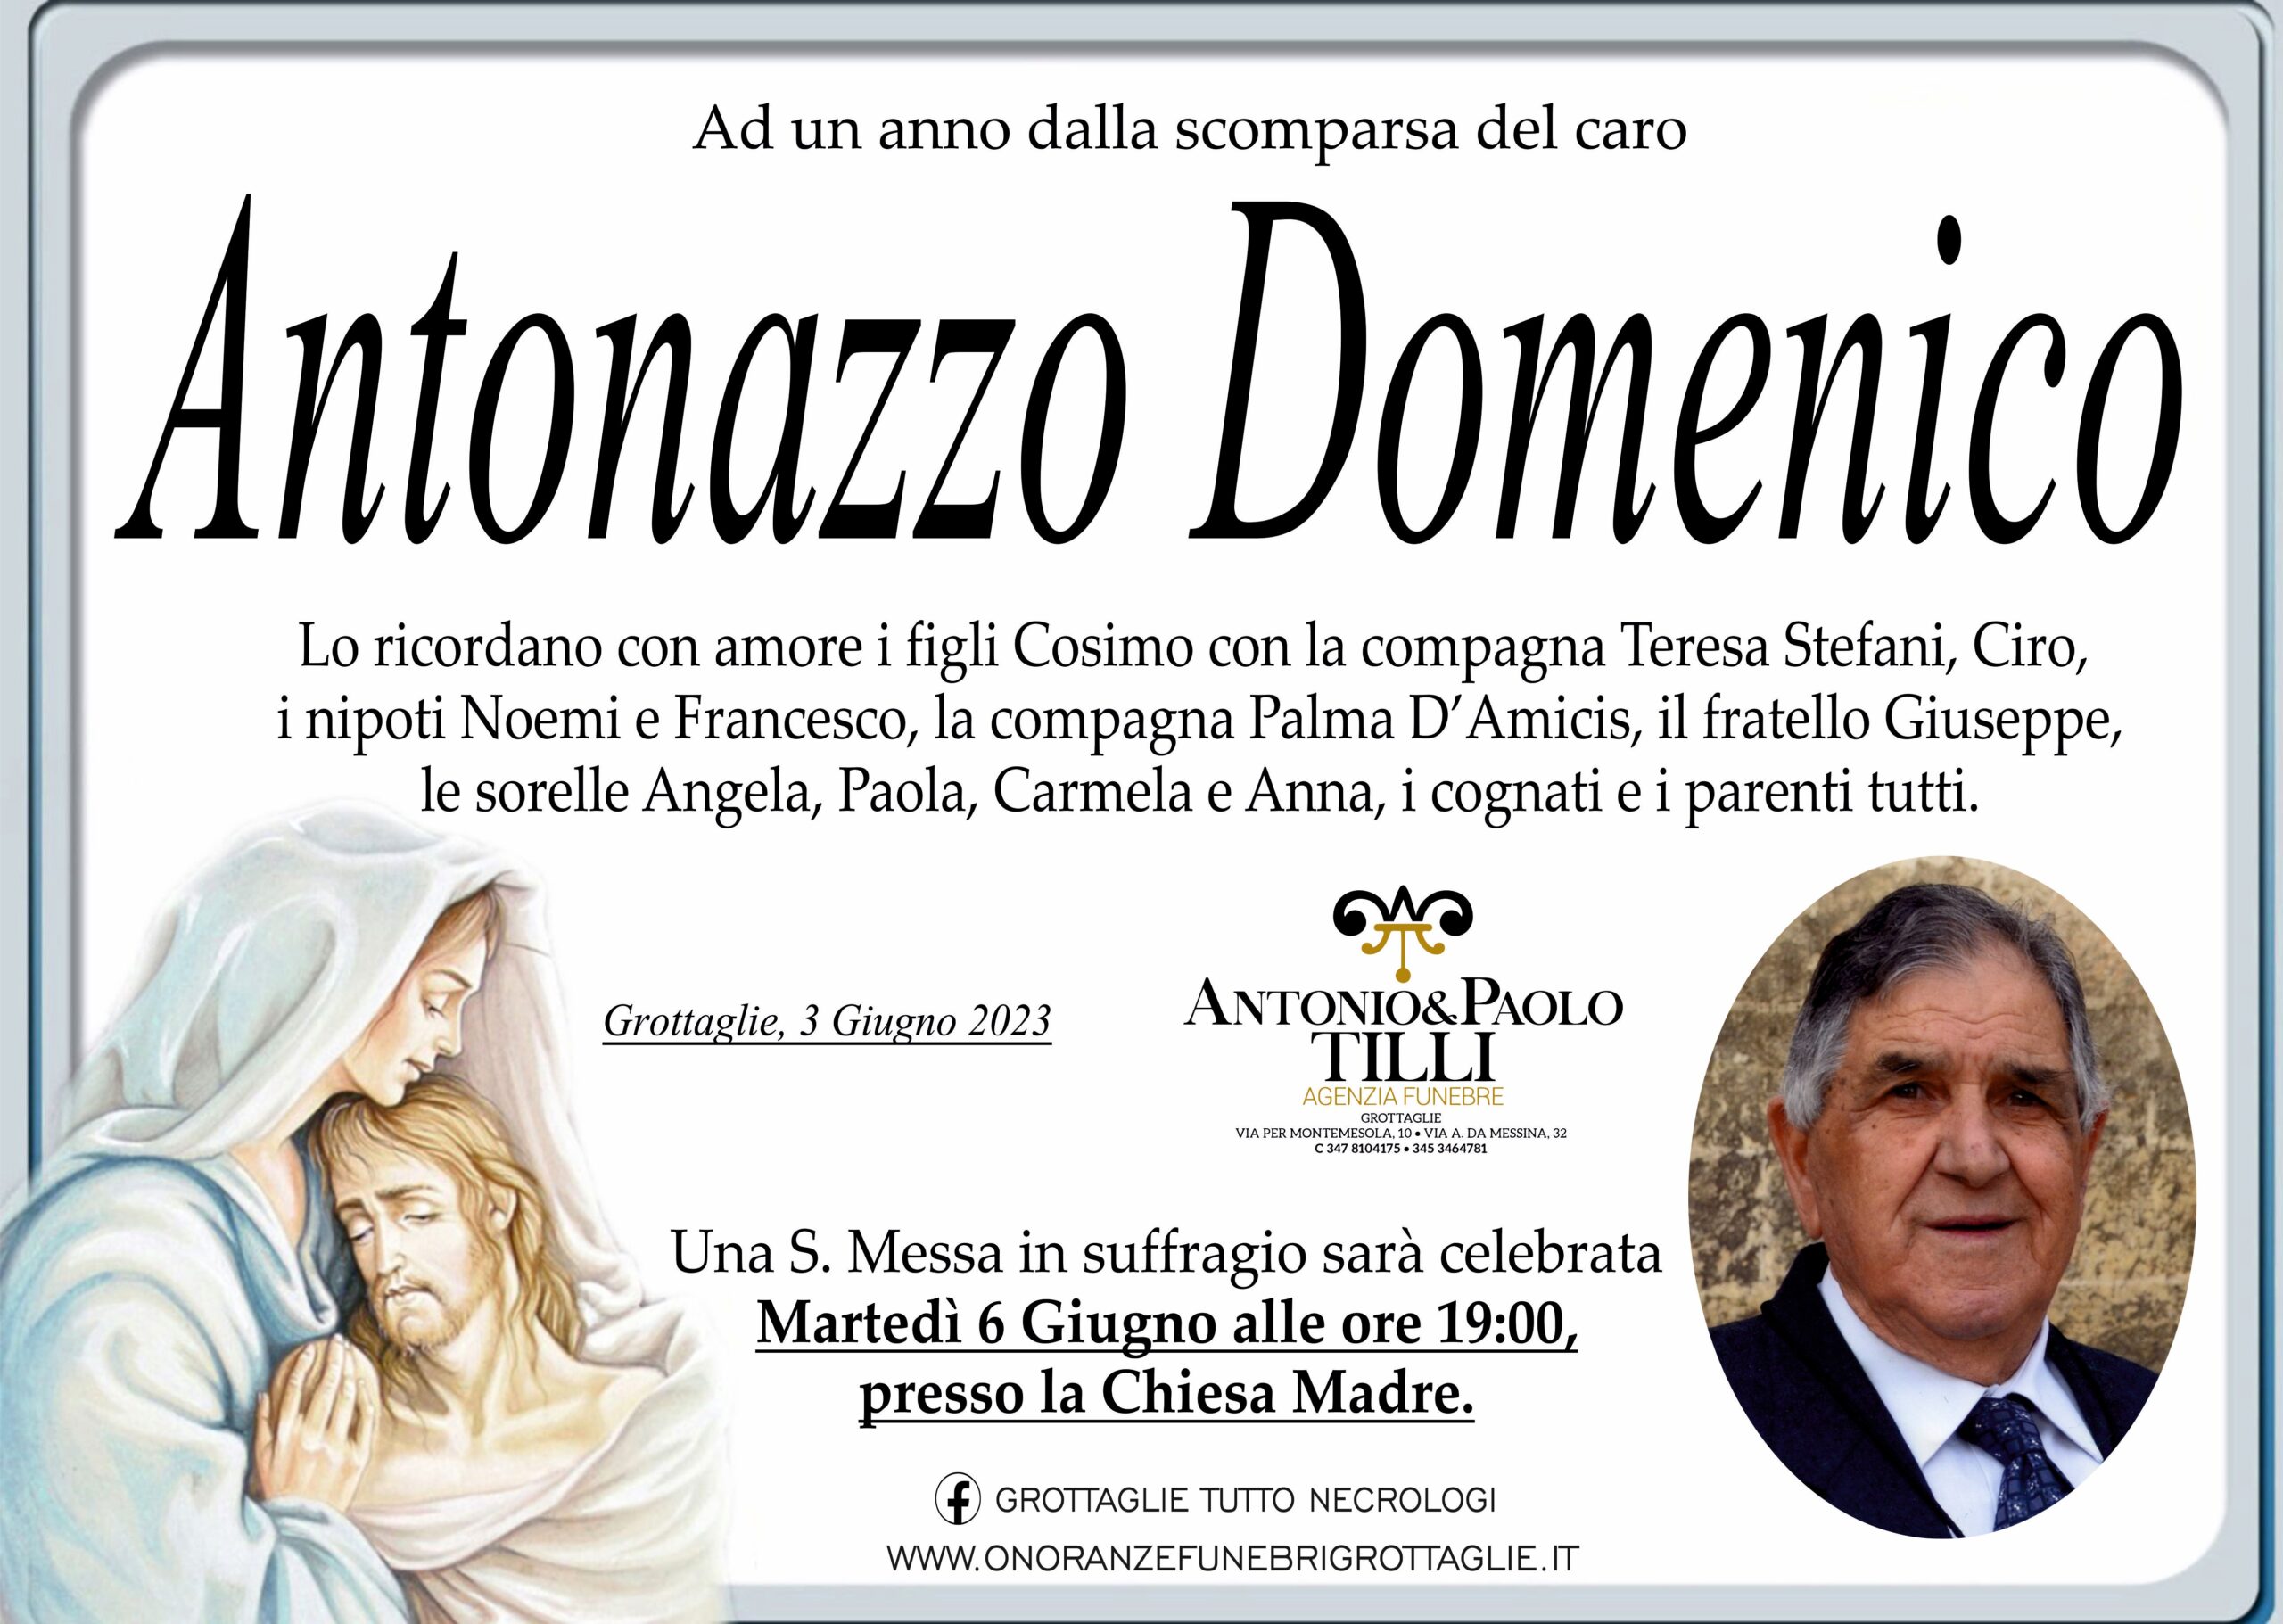 Anniveersario Antonazzo Domenico